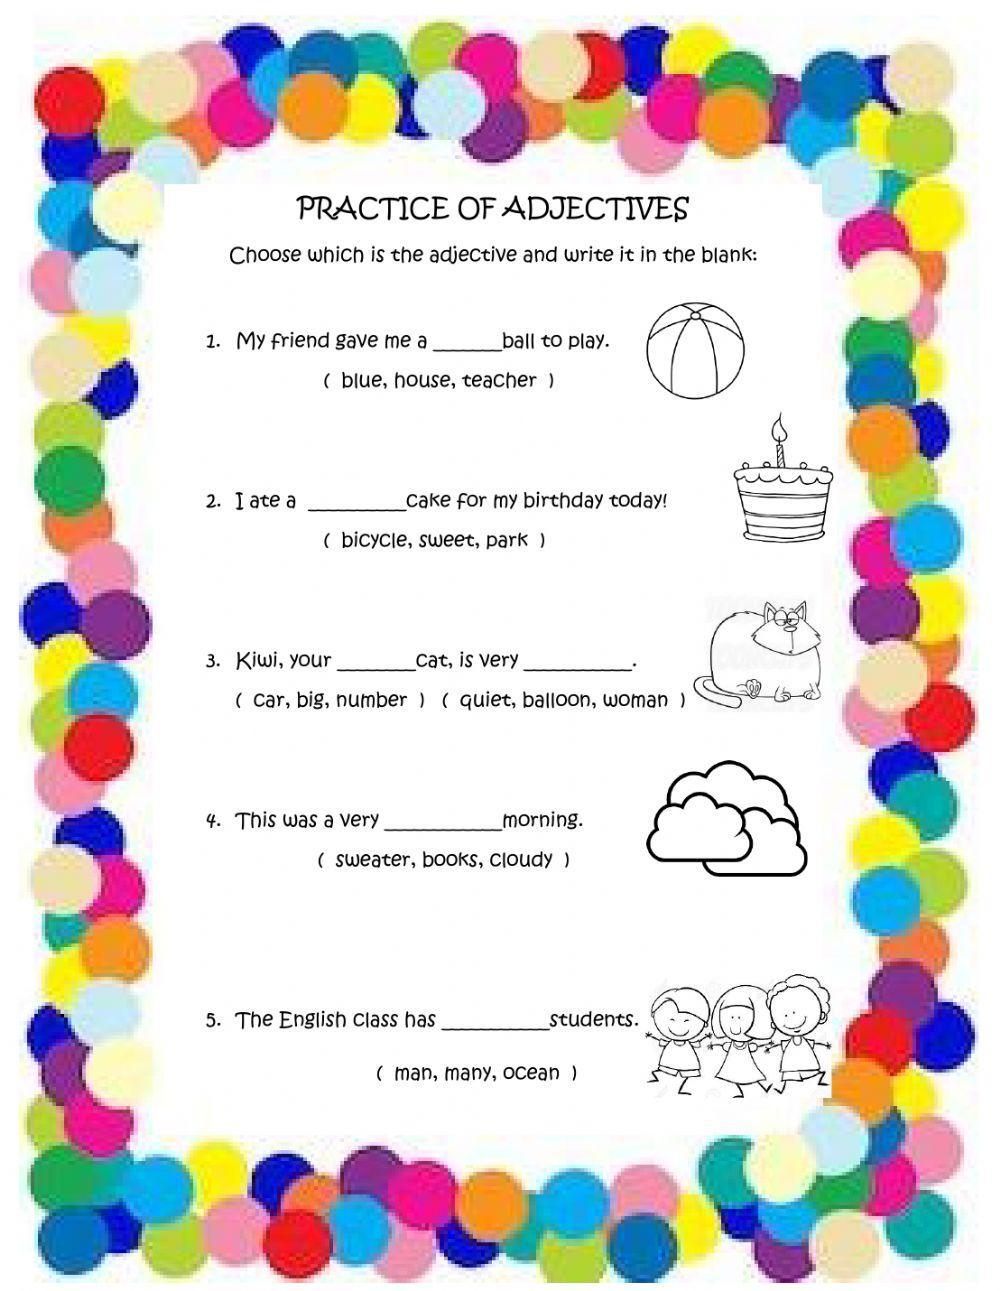 Practice adjectives 1